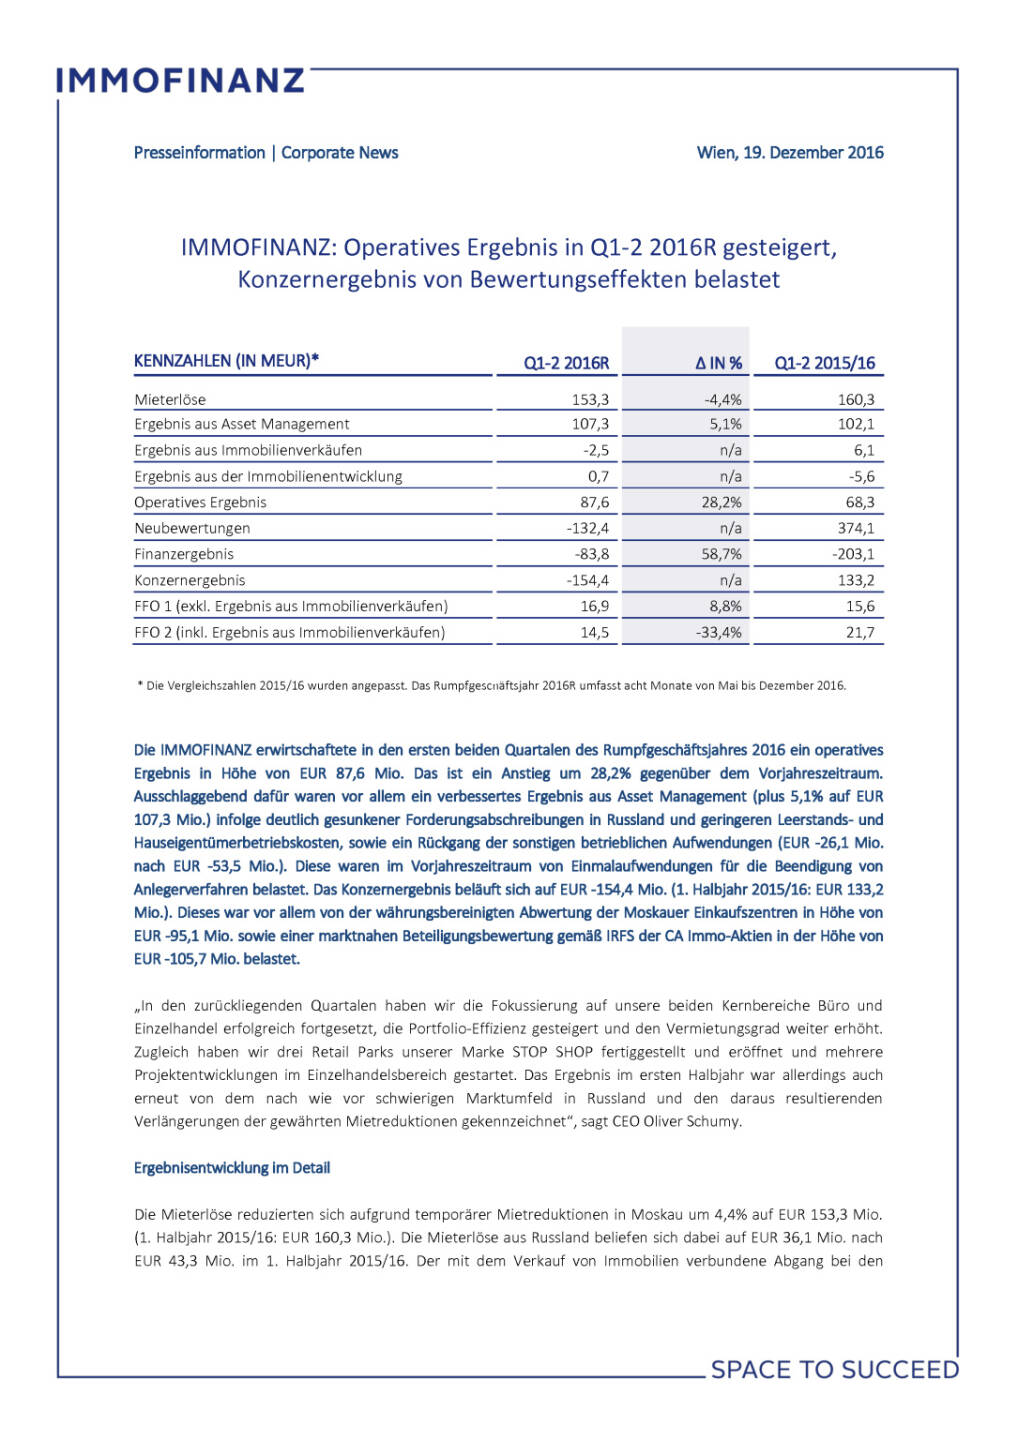 Immofinanz: Operatives Ergebnis in Q1-2 2016R, Seite 1/3, komplettes Dokument unter http://boerse-social.com/static/uploads/file_2033_immofinanz_operatives_ergebnis_in_q1-2_2016r.pdf